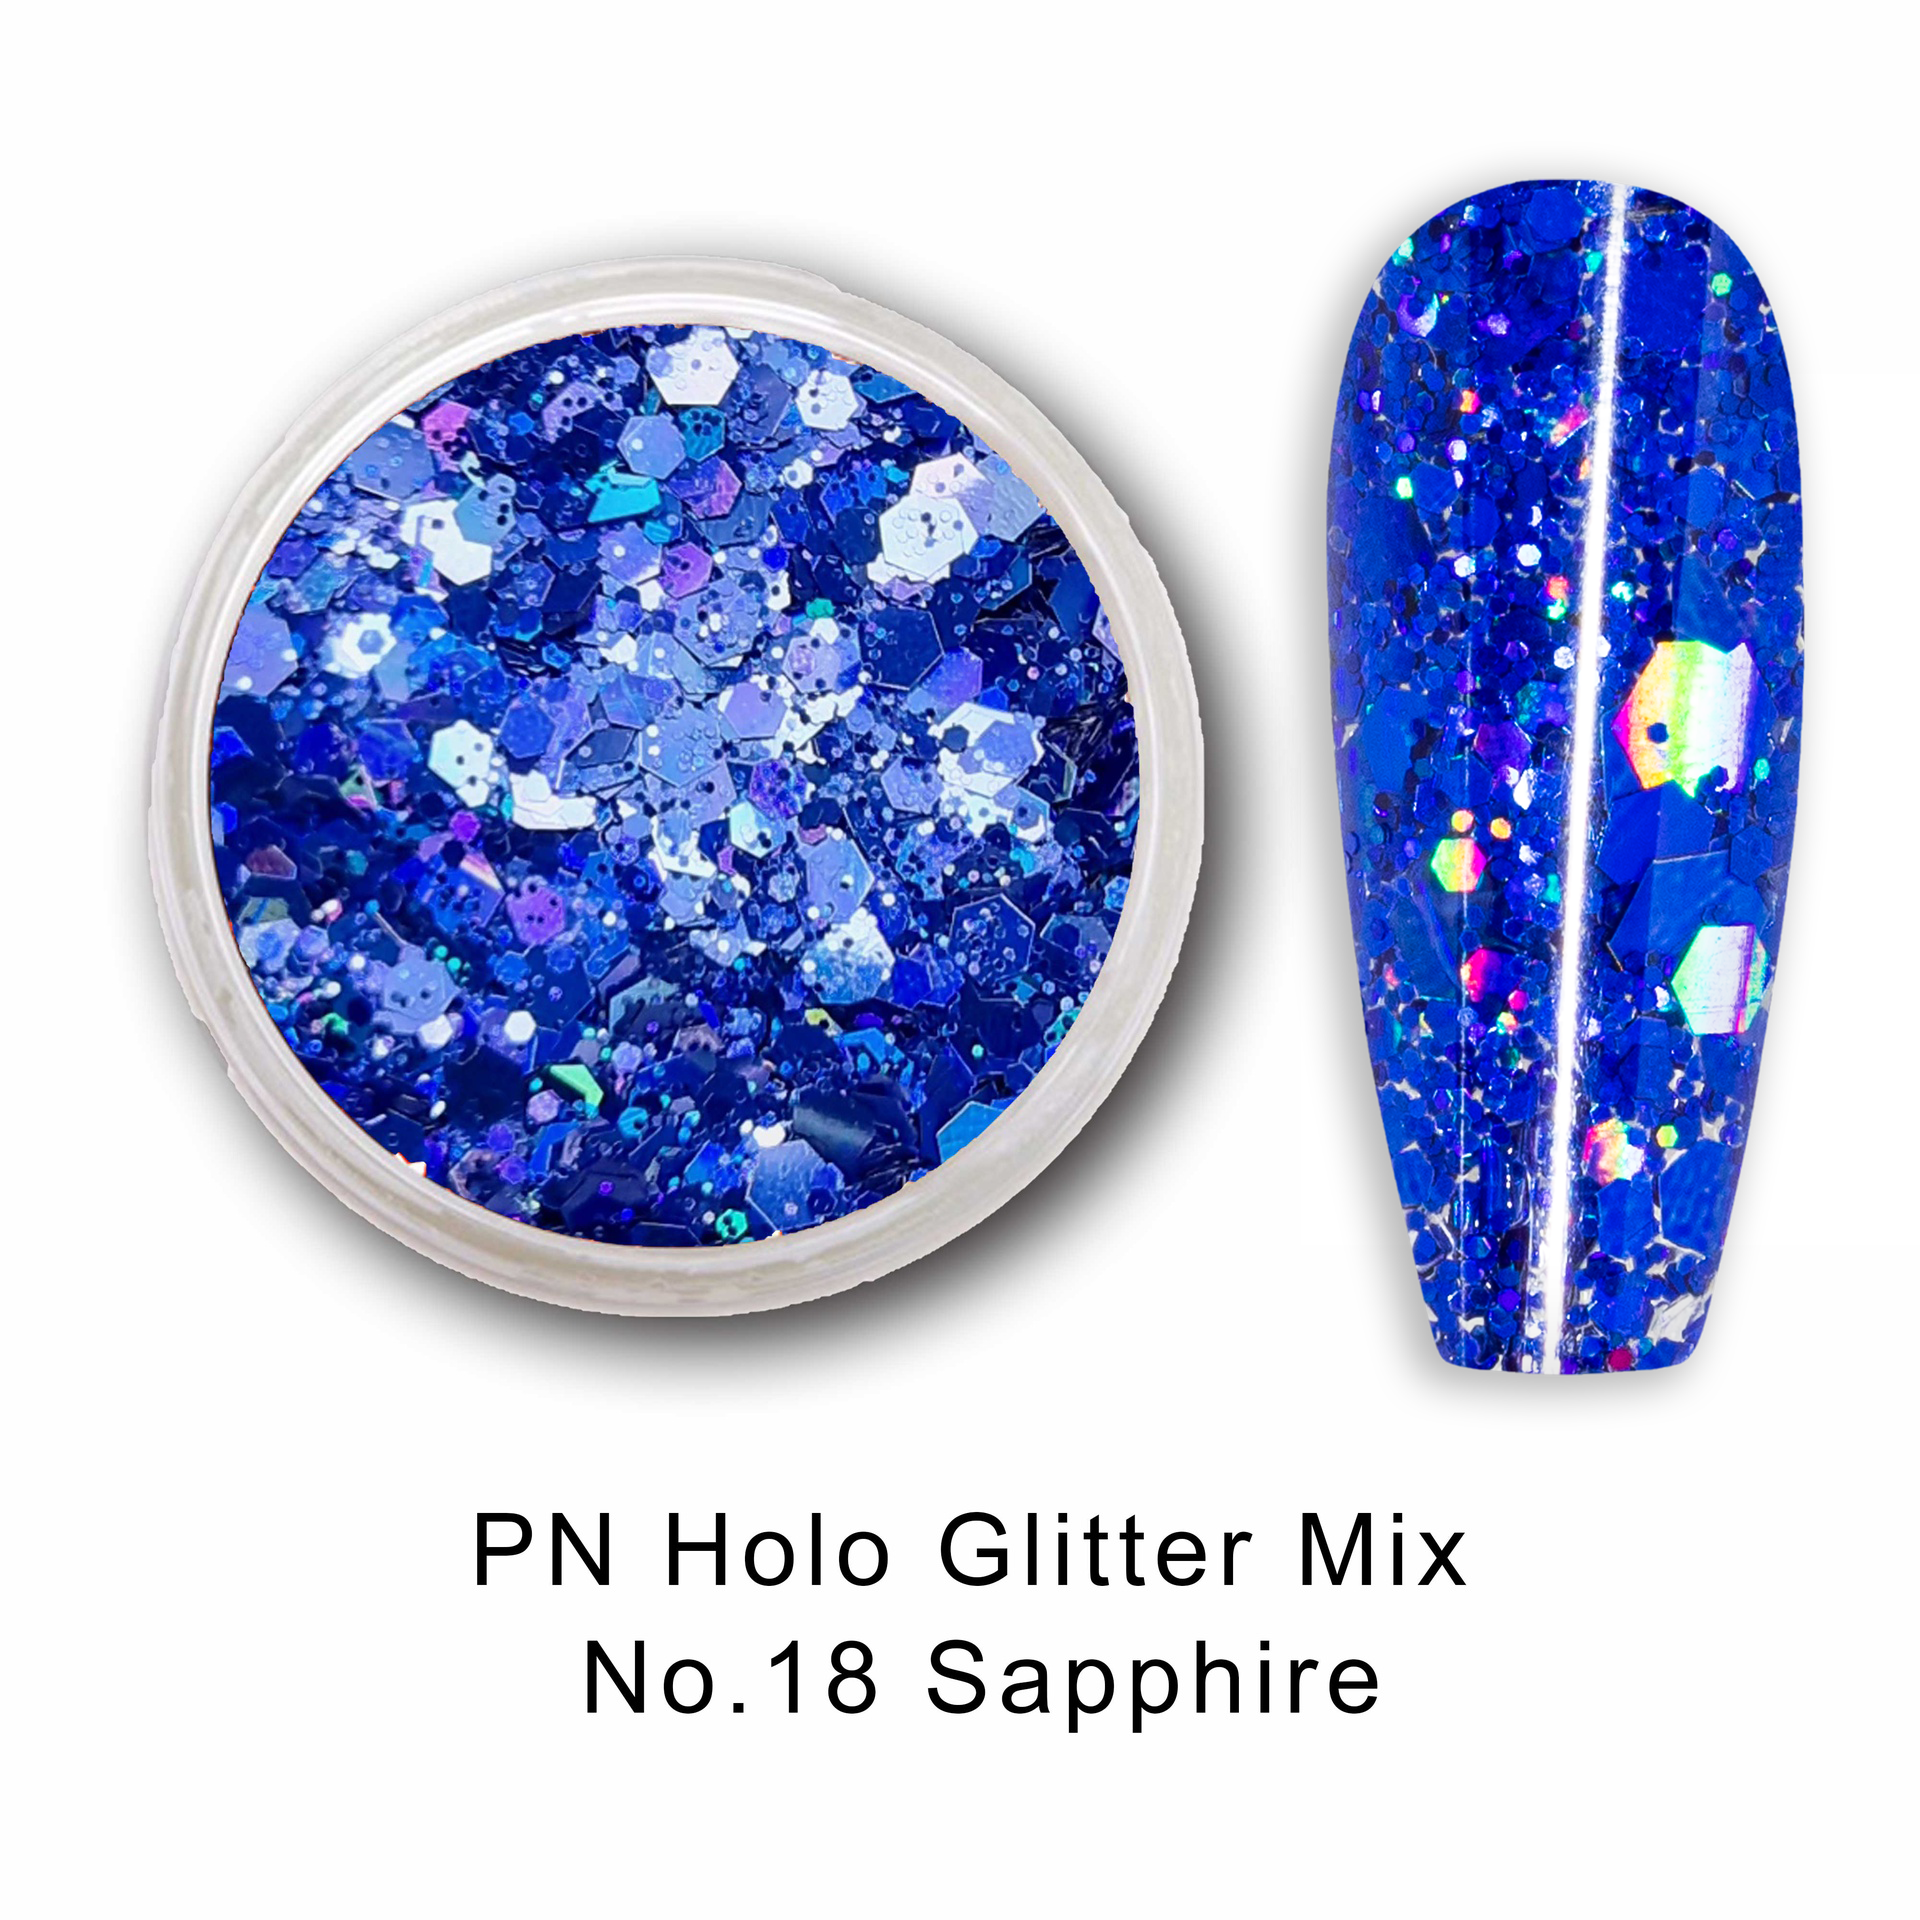 PN Holo glitter mix No.18 Sapphire